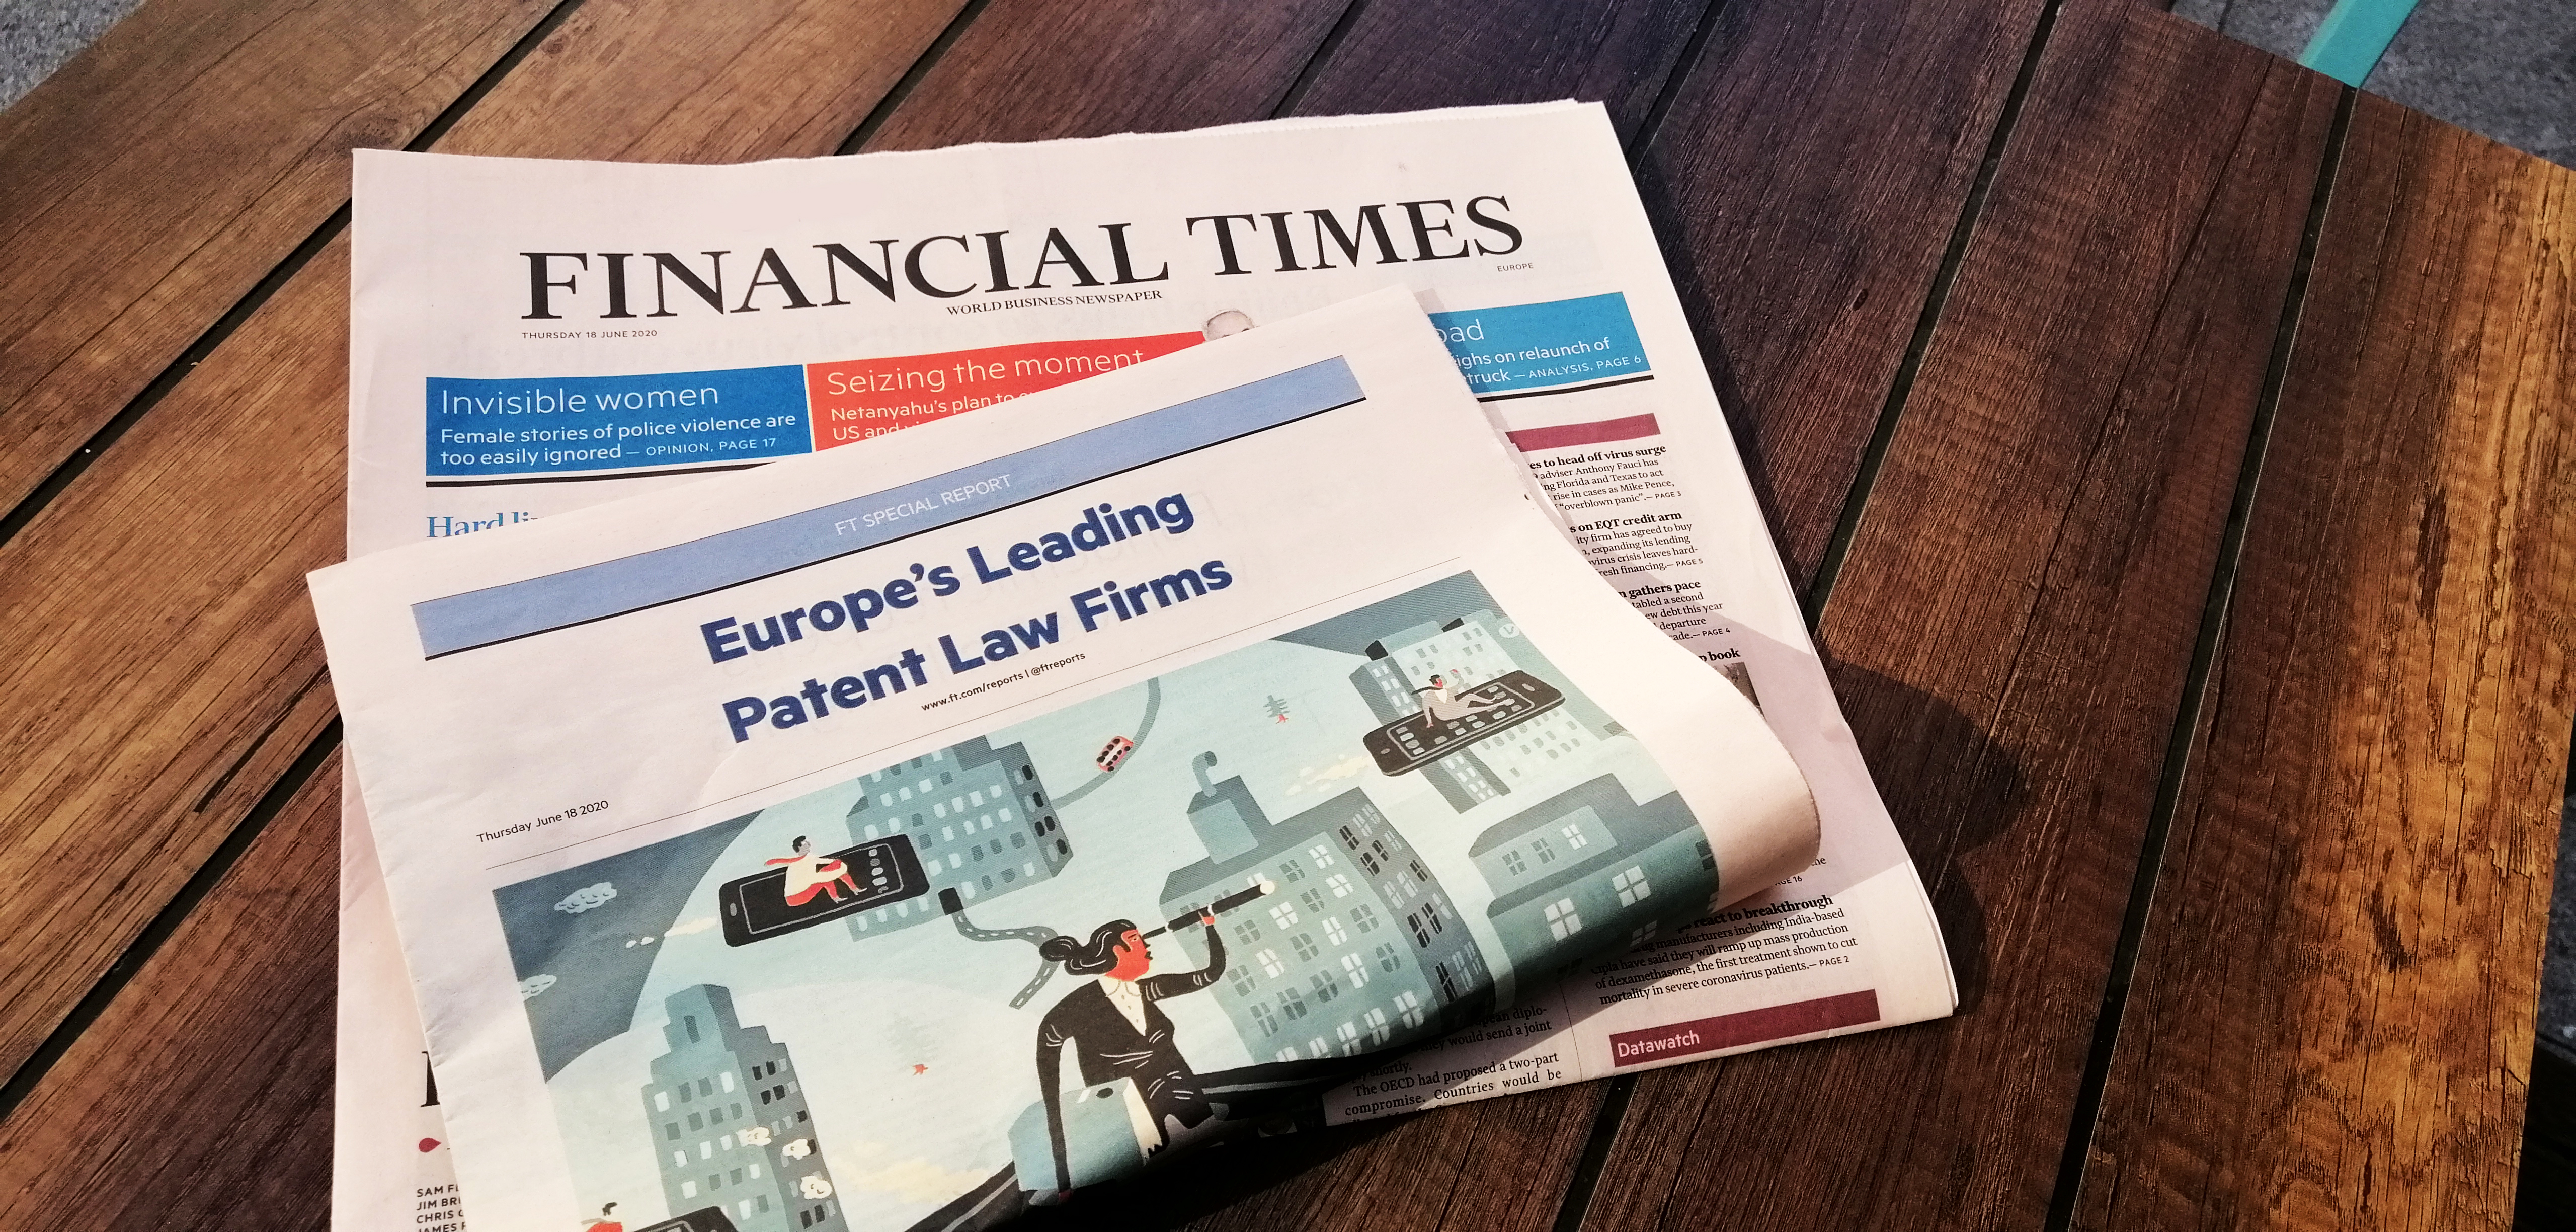 2019 - Financial Times menciona a ABG Intellectual Property al seu article “Europe’s Leading Patent Law Firms 2019”